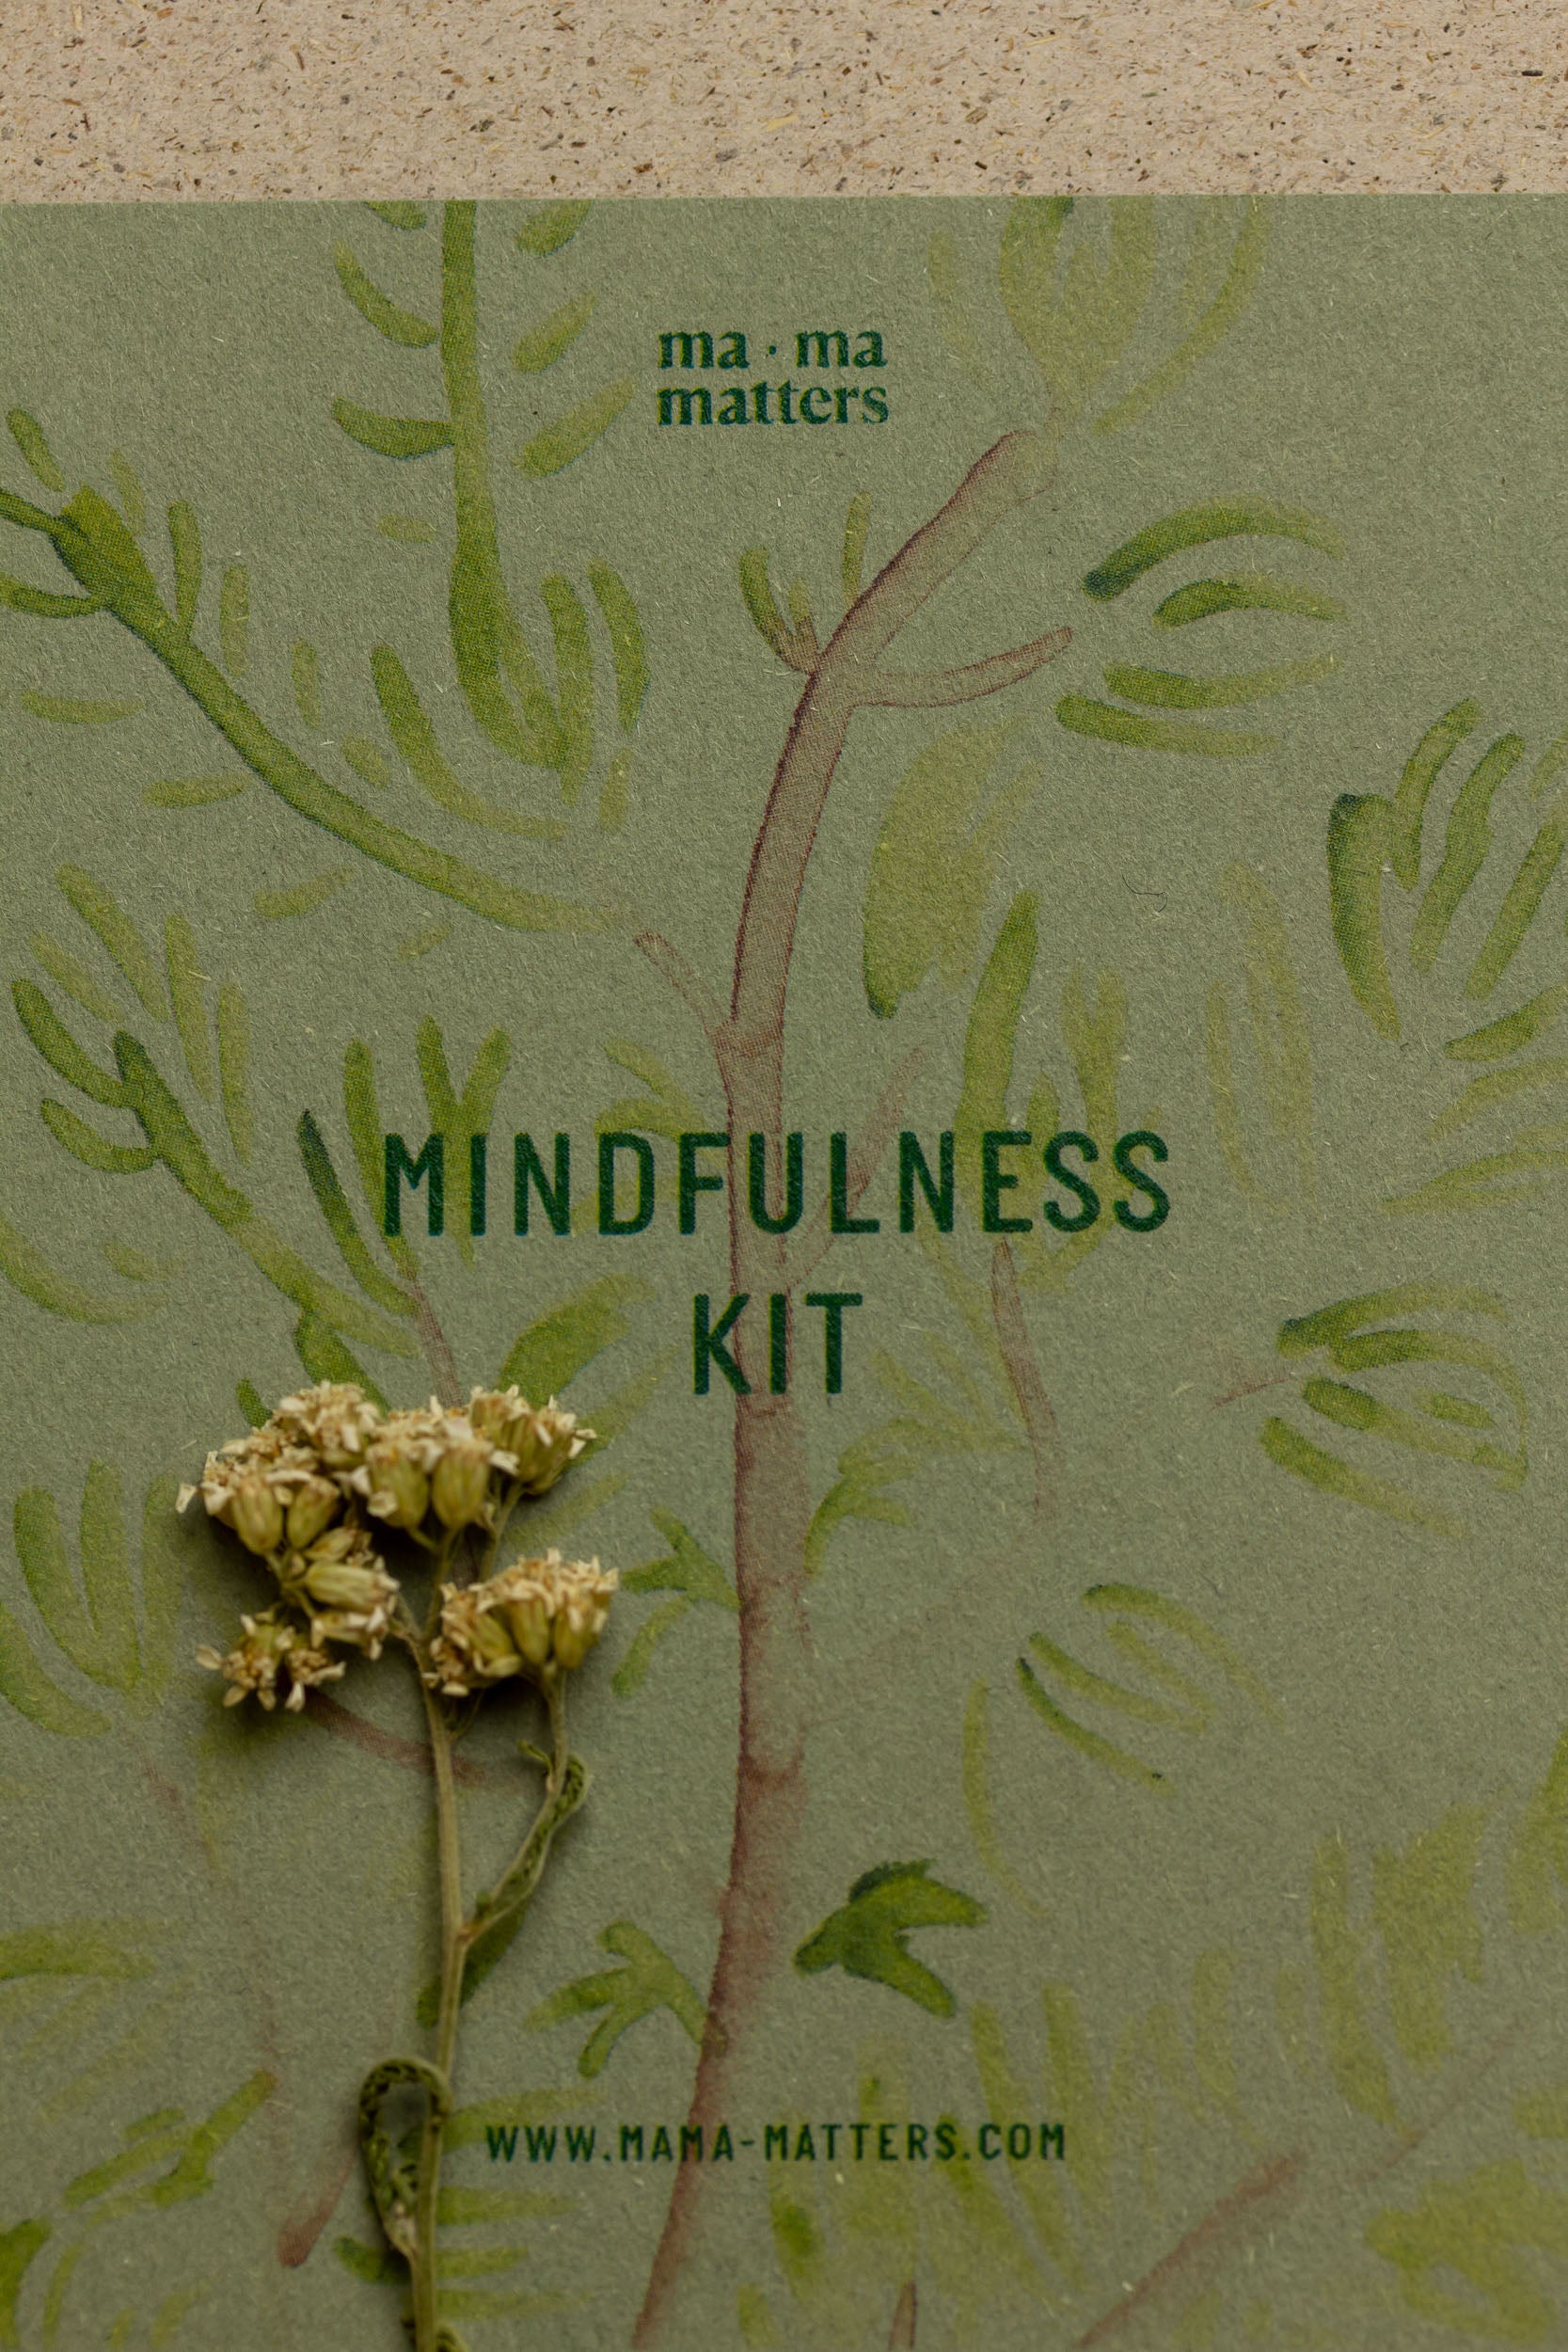 The Mindfulness Kit